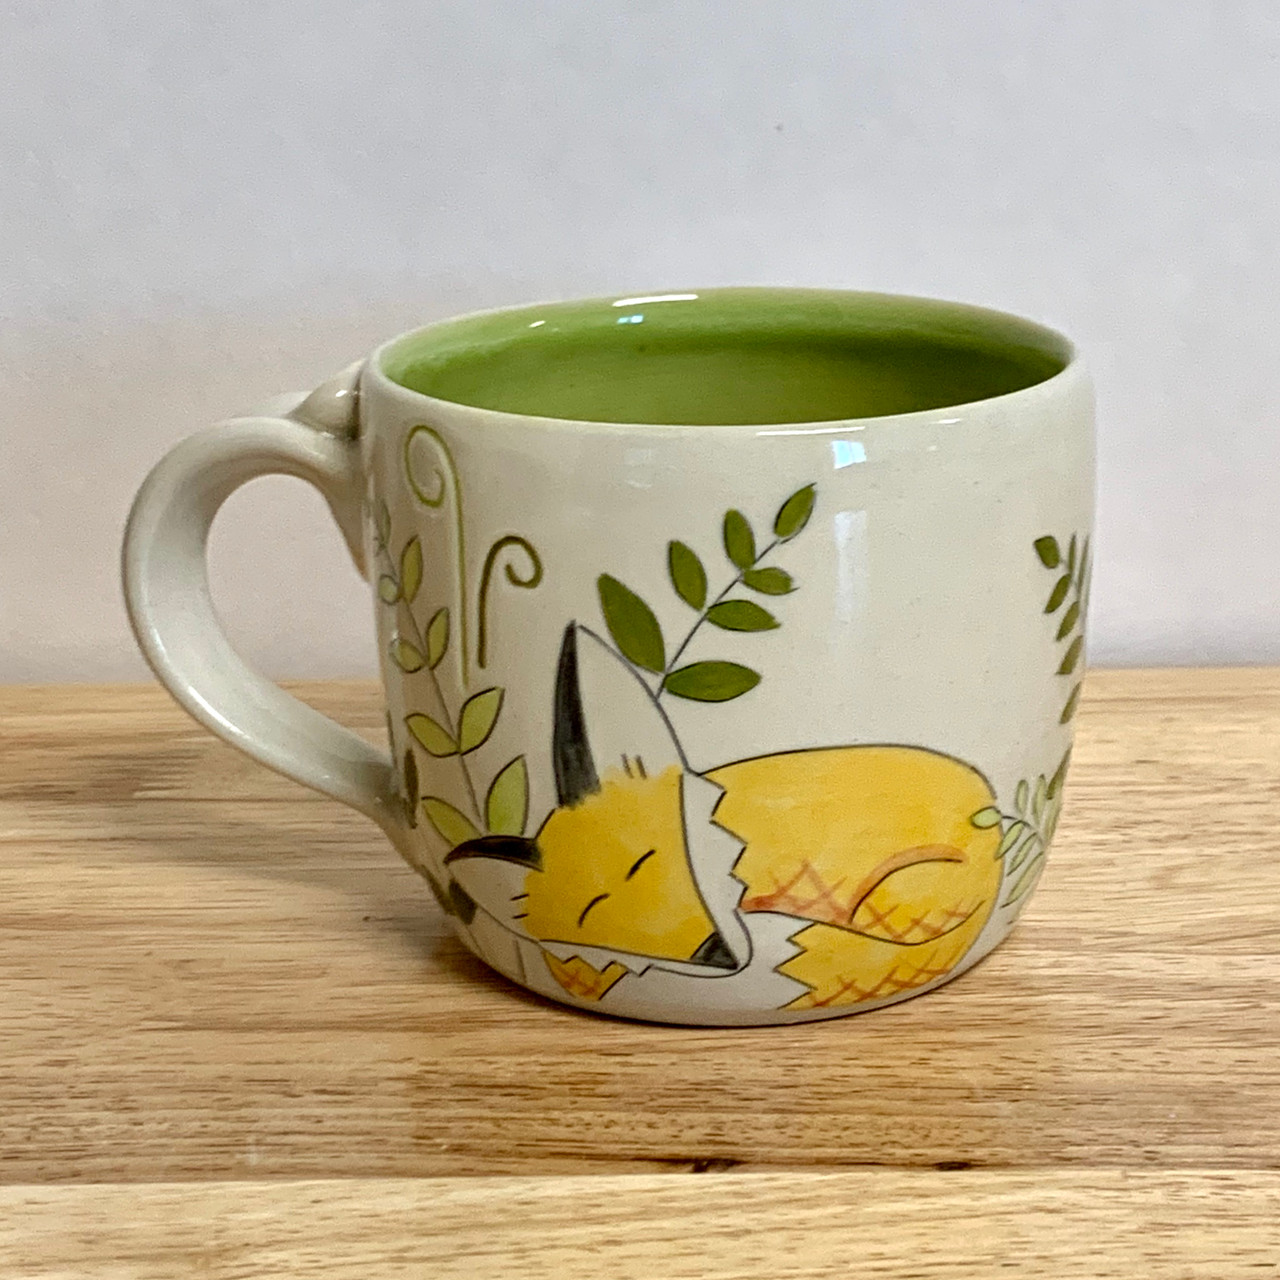 16 oz. Ceramic Starbucks Mug with Bamboo Lid and Spoon - Distinctive Goods